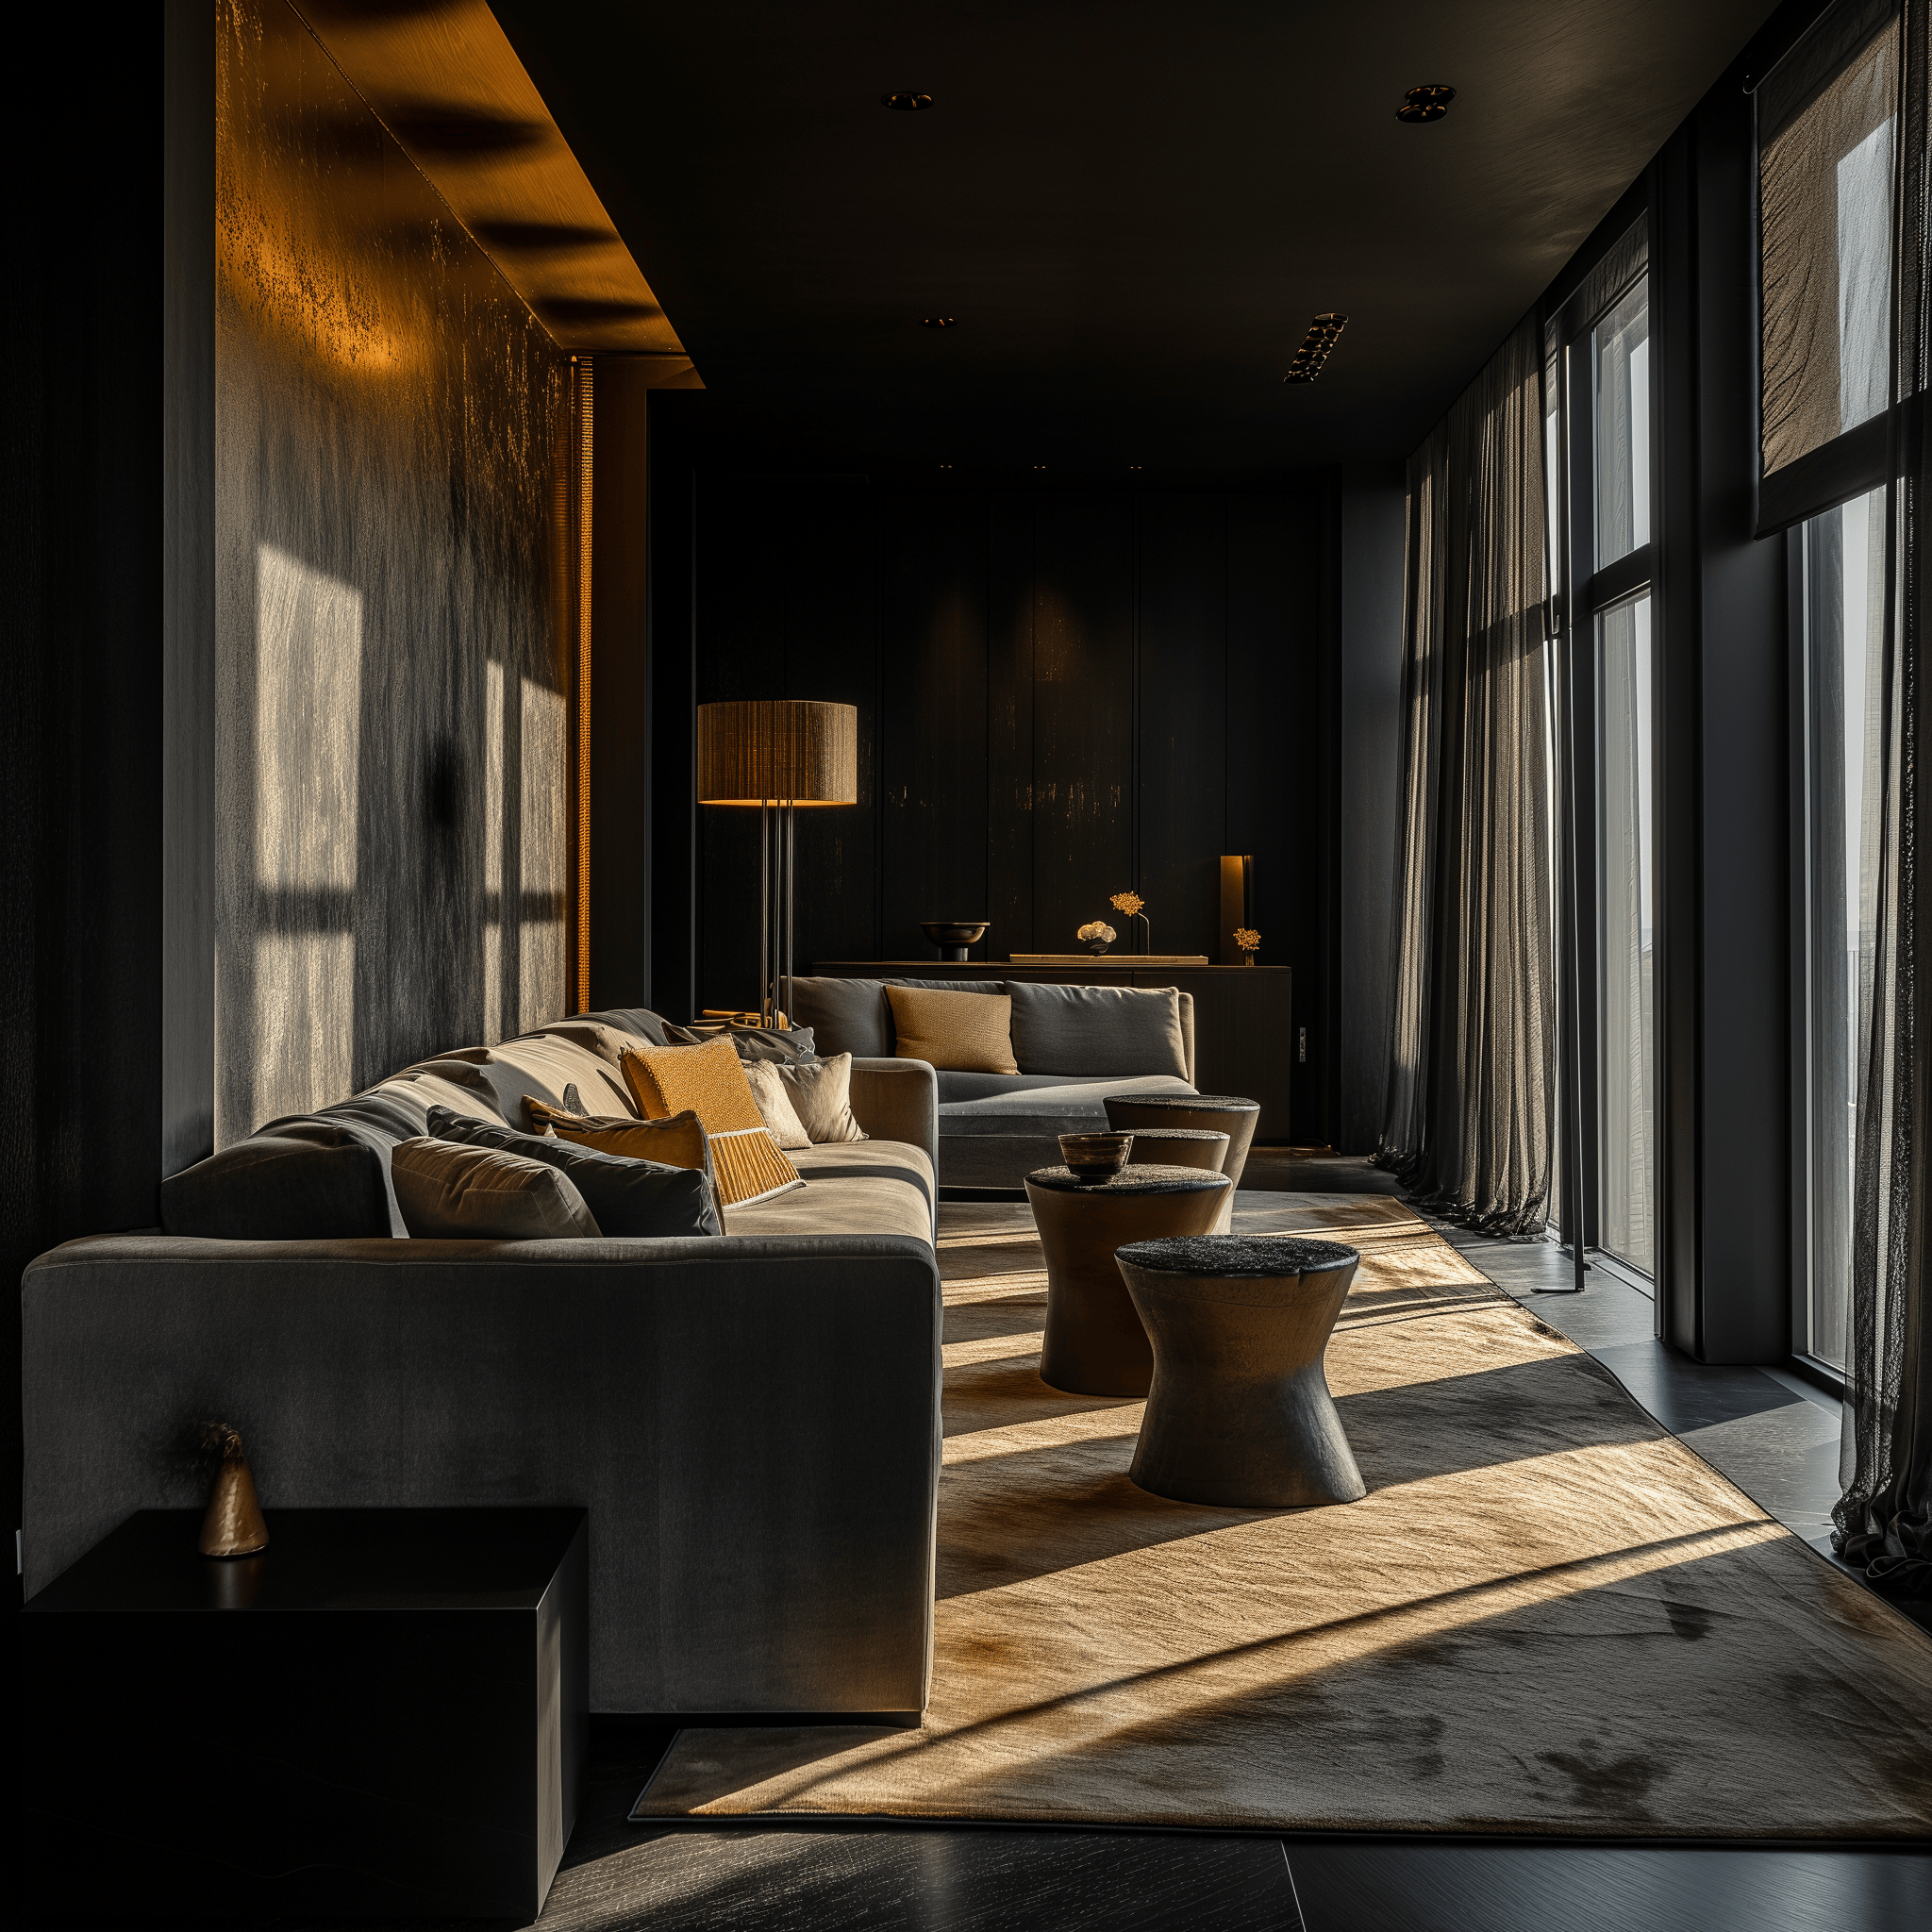 dark living room ideas cozy aesthetic decor designs